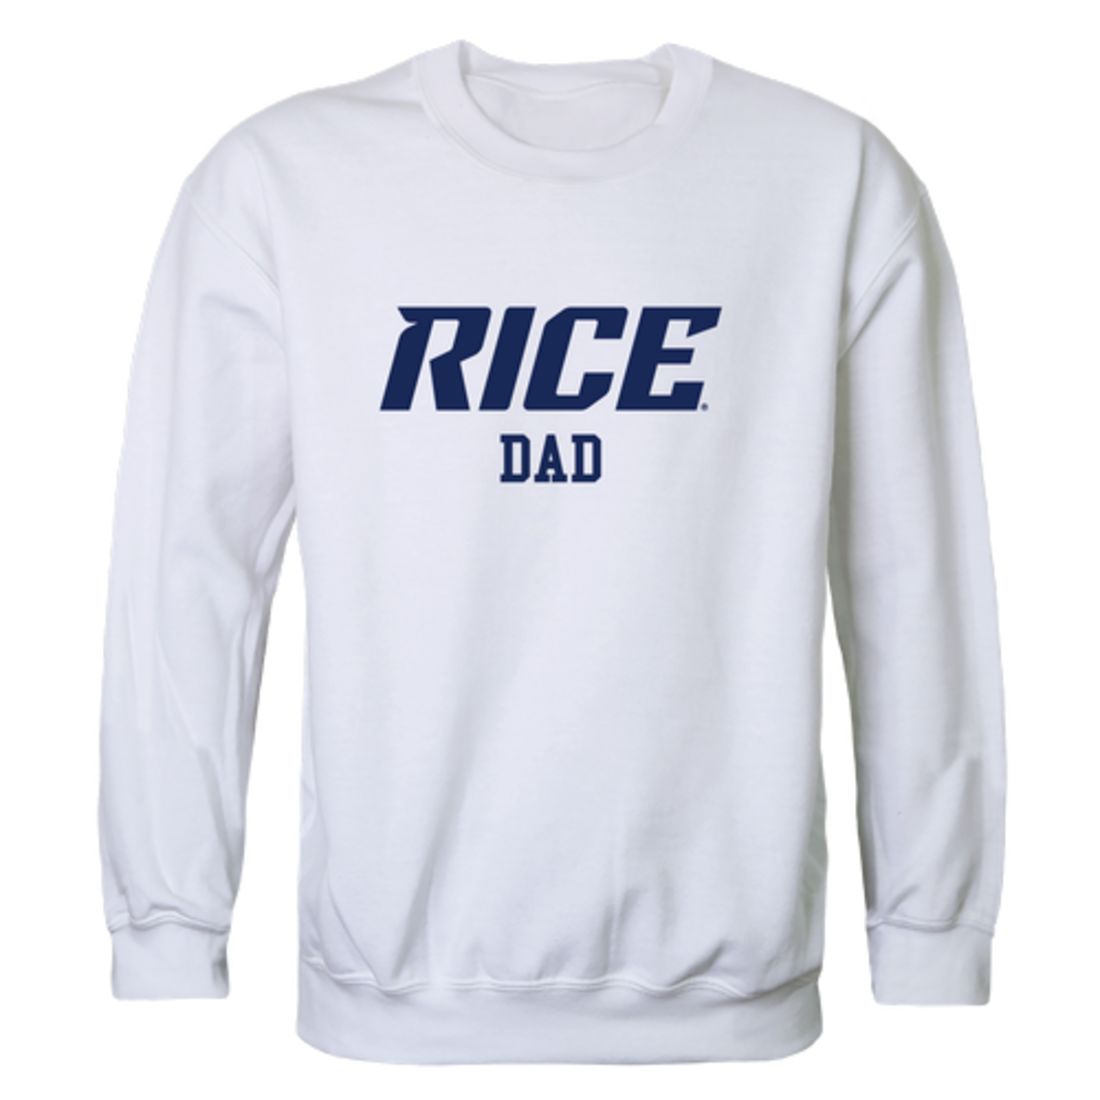 Rice University Owls Dad Fleece Crewneck Pullover Sweatshirt